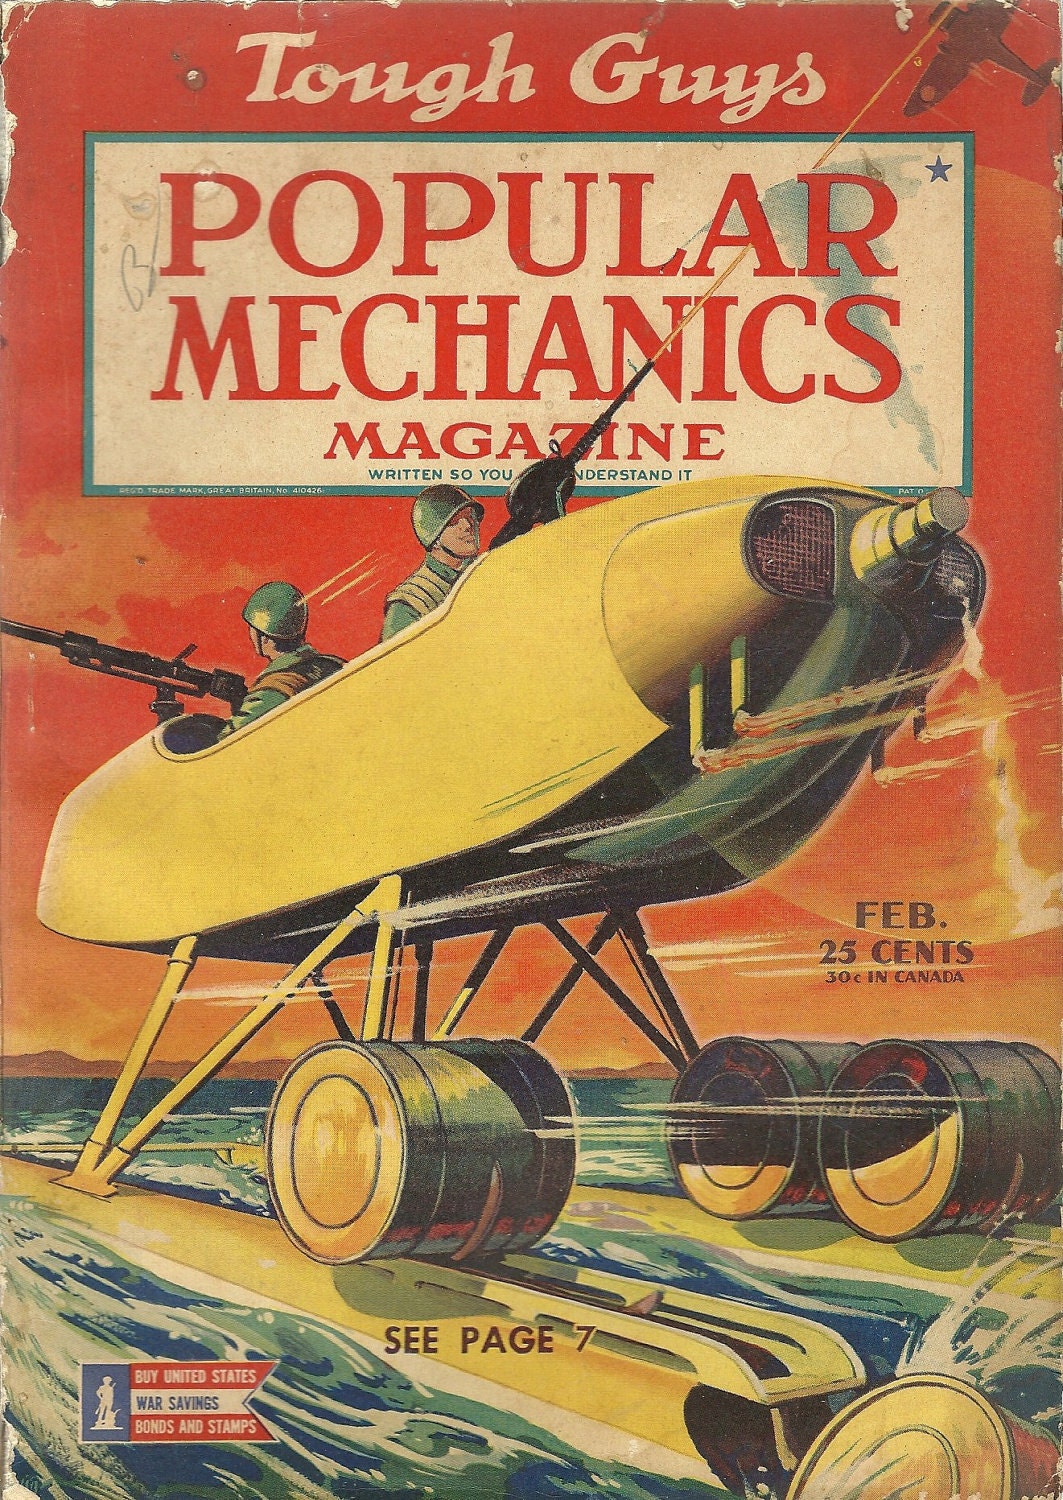 February 1943 Popular Mechanics Tough Guys Nazi by 